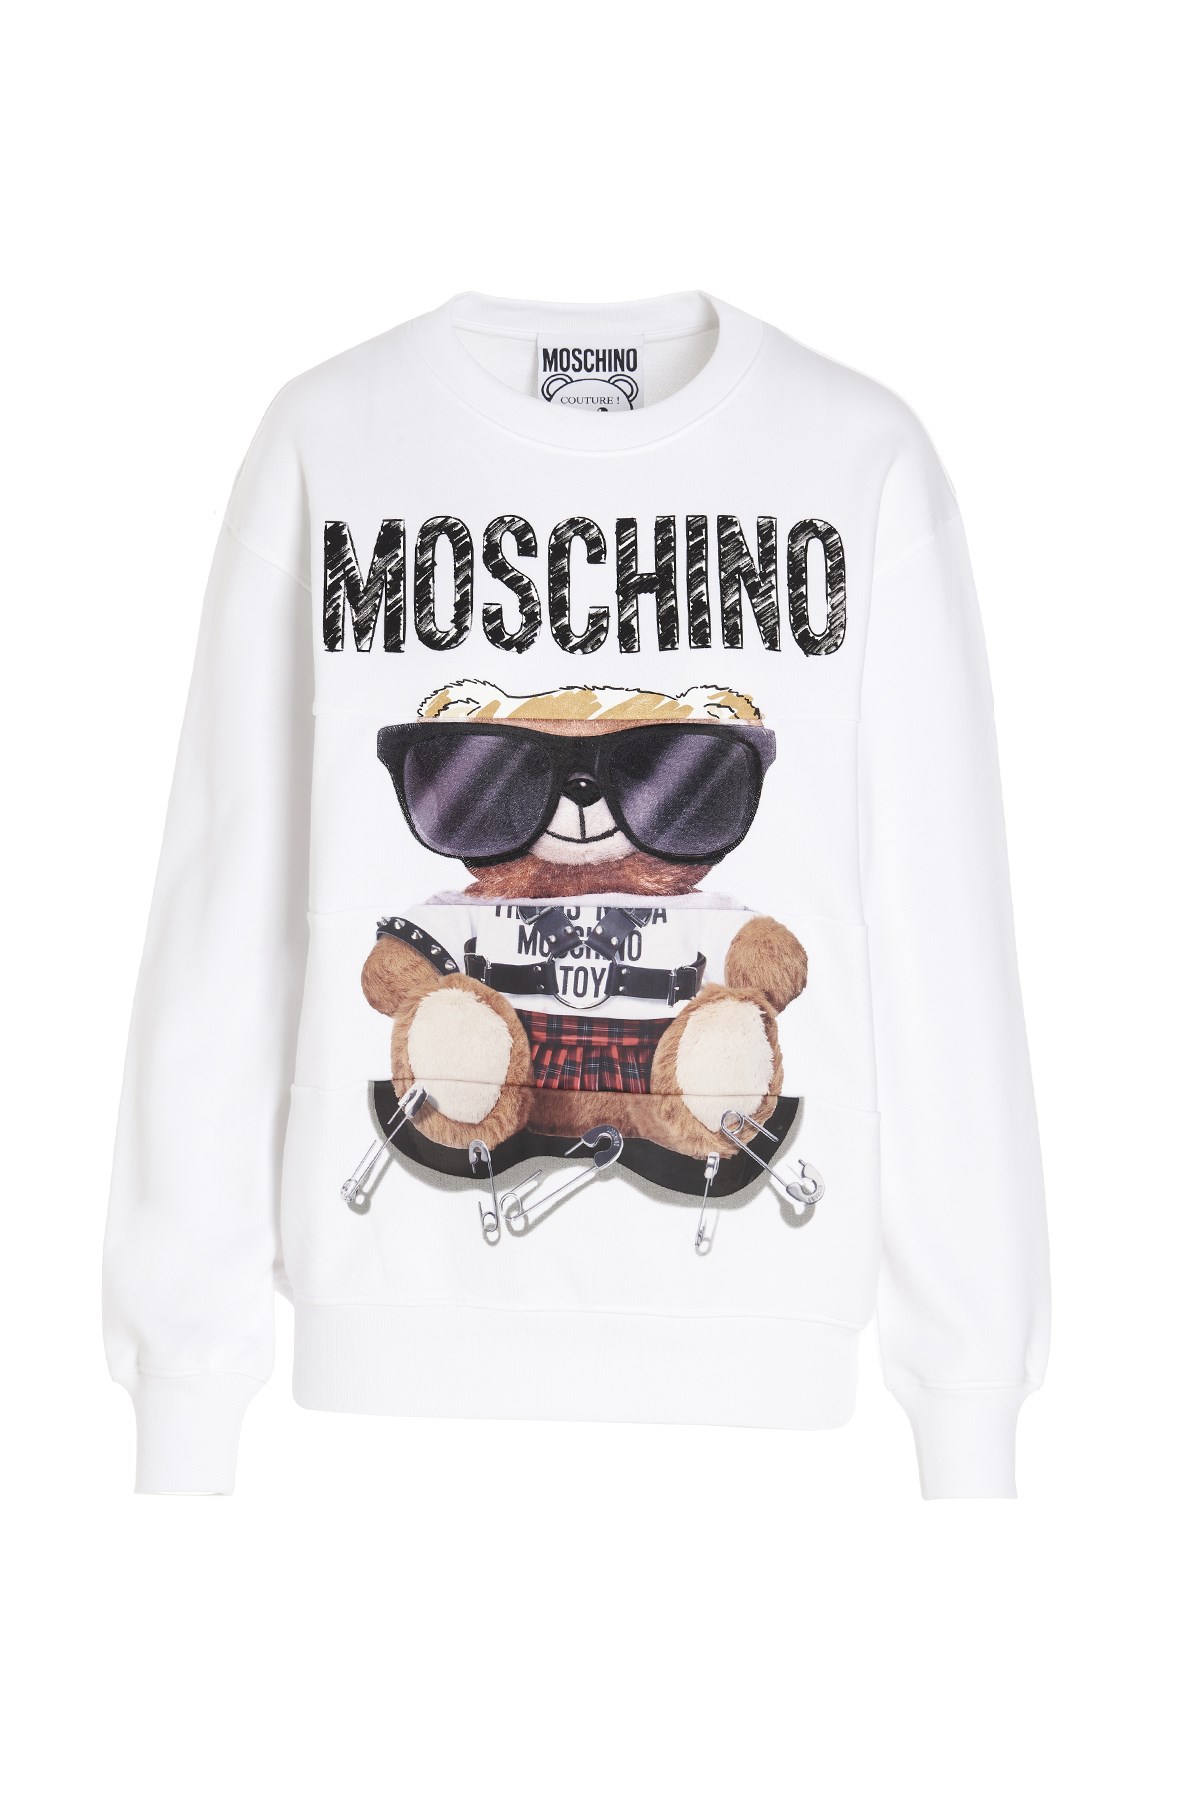 MOSCHINO 'Teddy Spectacles’ Sweatshirt